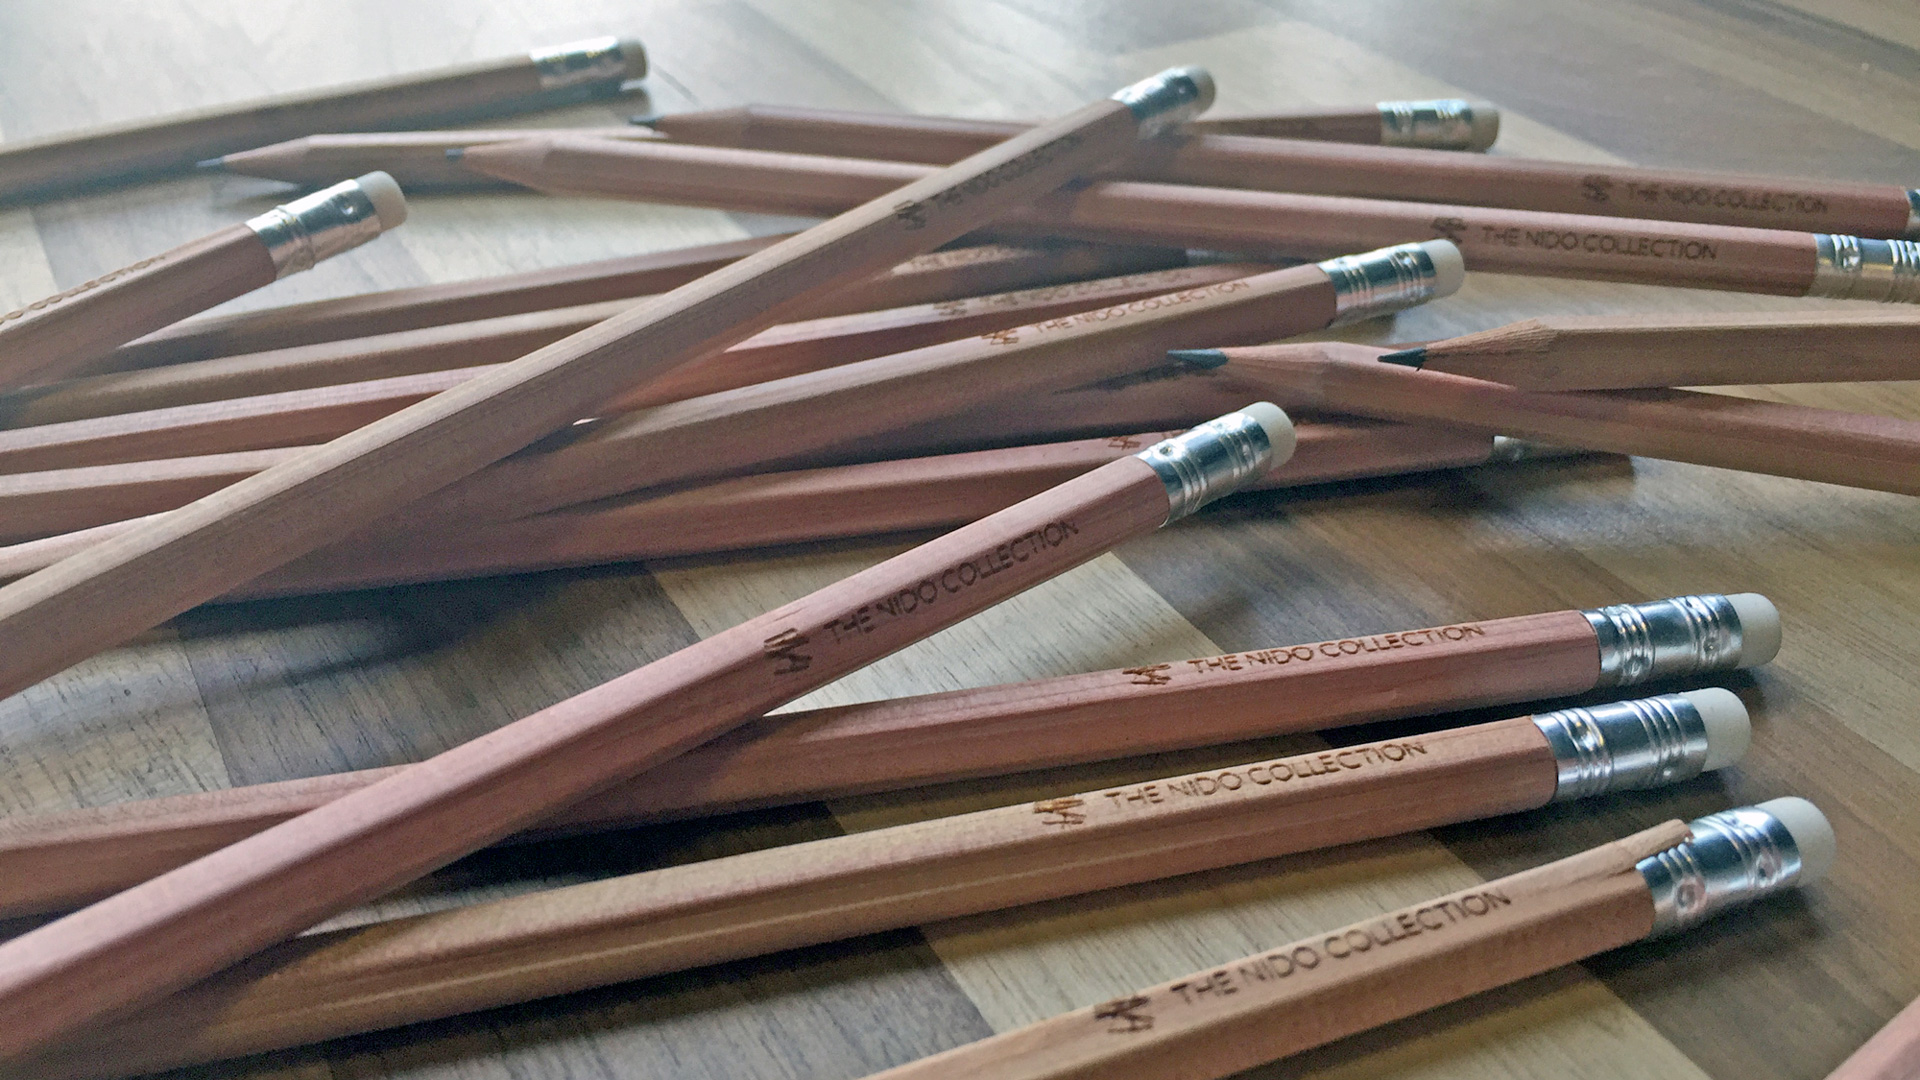 The Nido Collection pencils